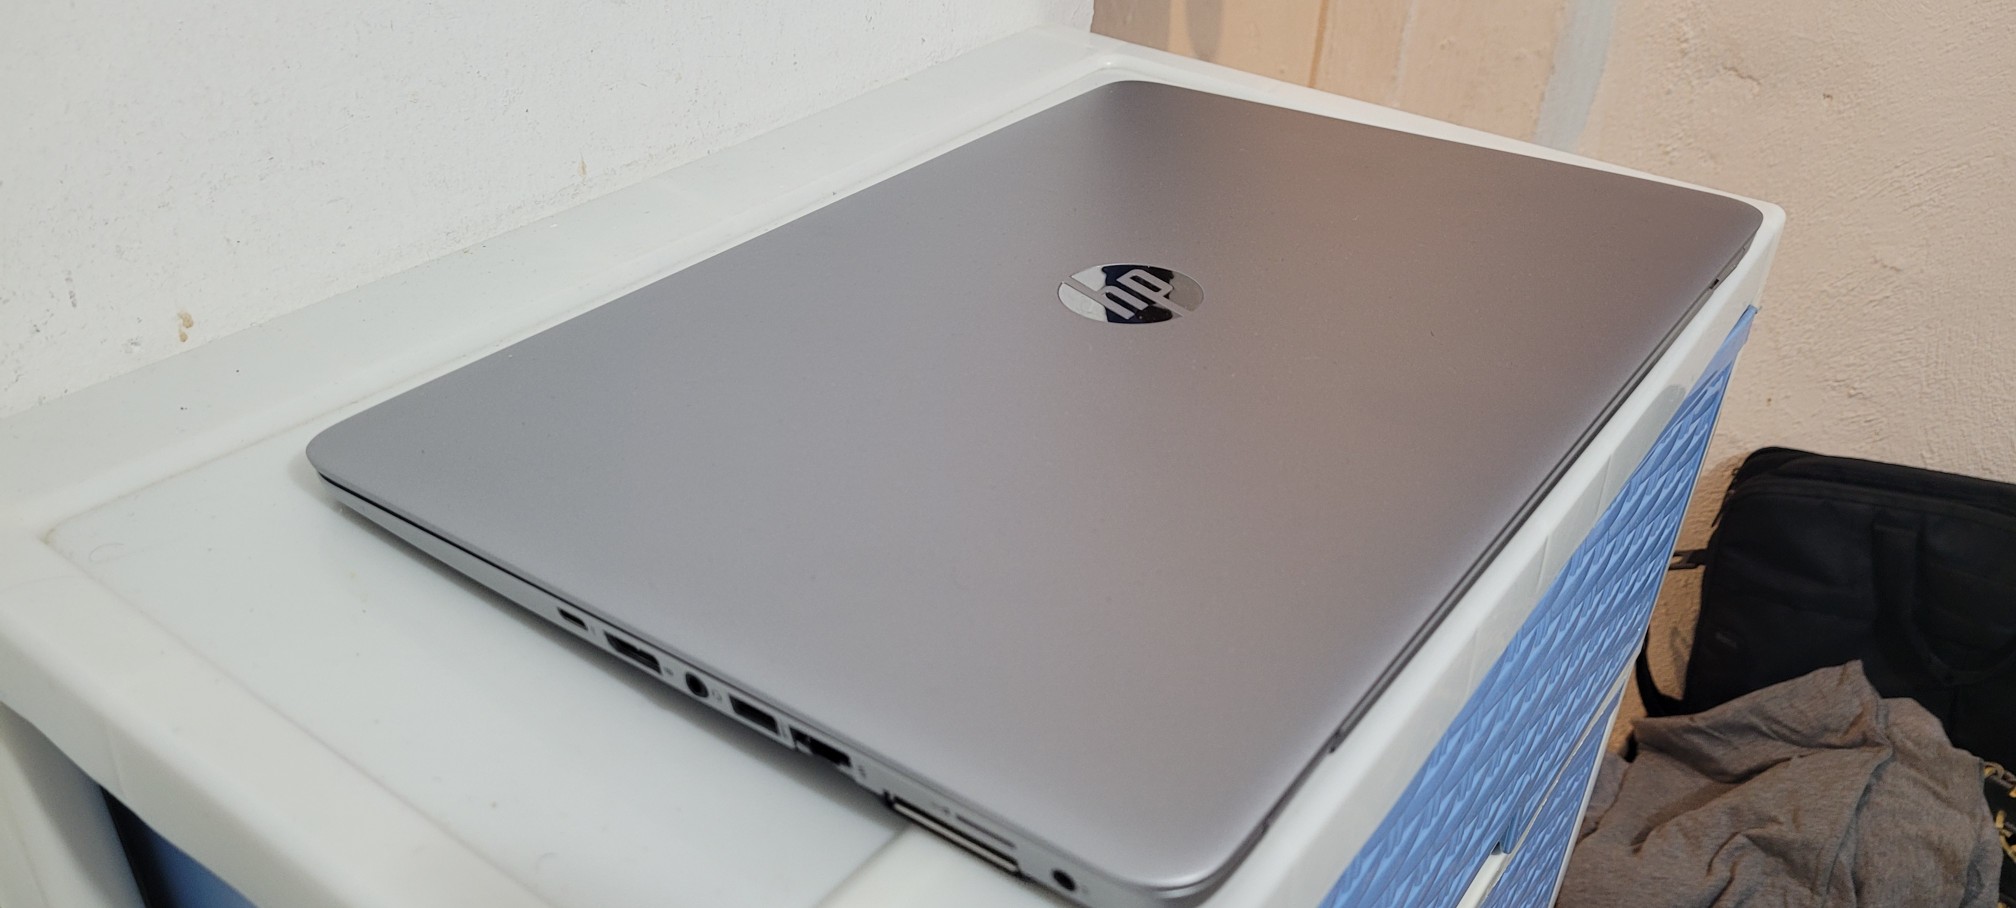 computadoras y laptops - Laptop hp Slim G2 14 Pulg Core i5 6ta Ram 8gb ddr4 Disco 500gb SSD 1080p 2